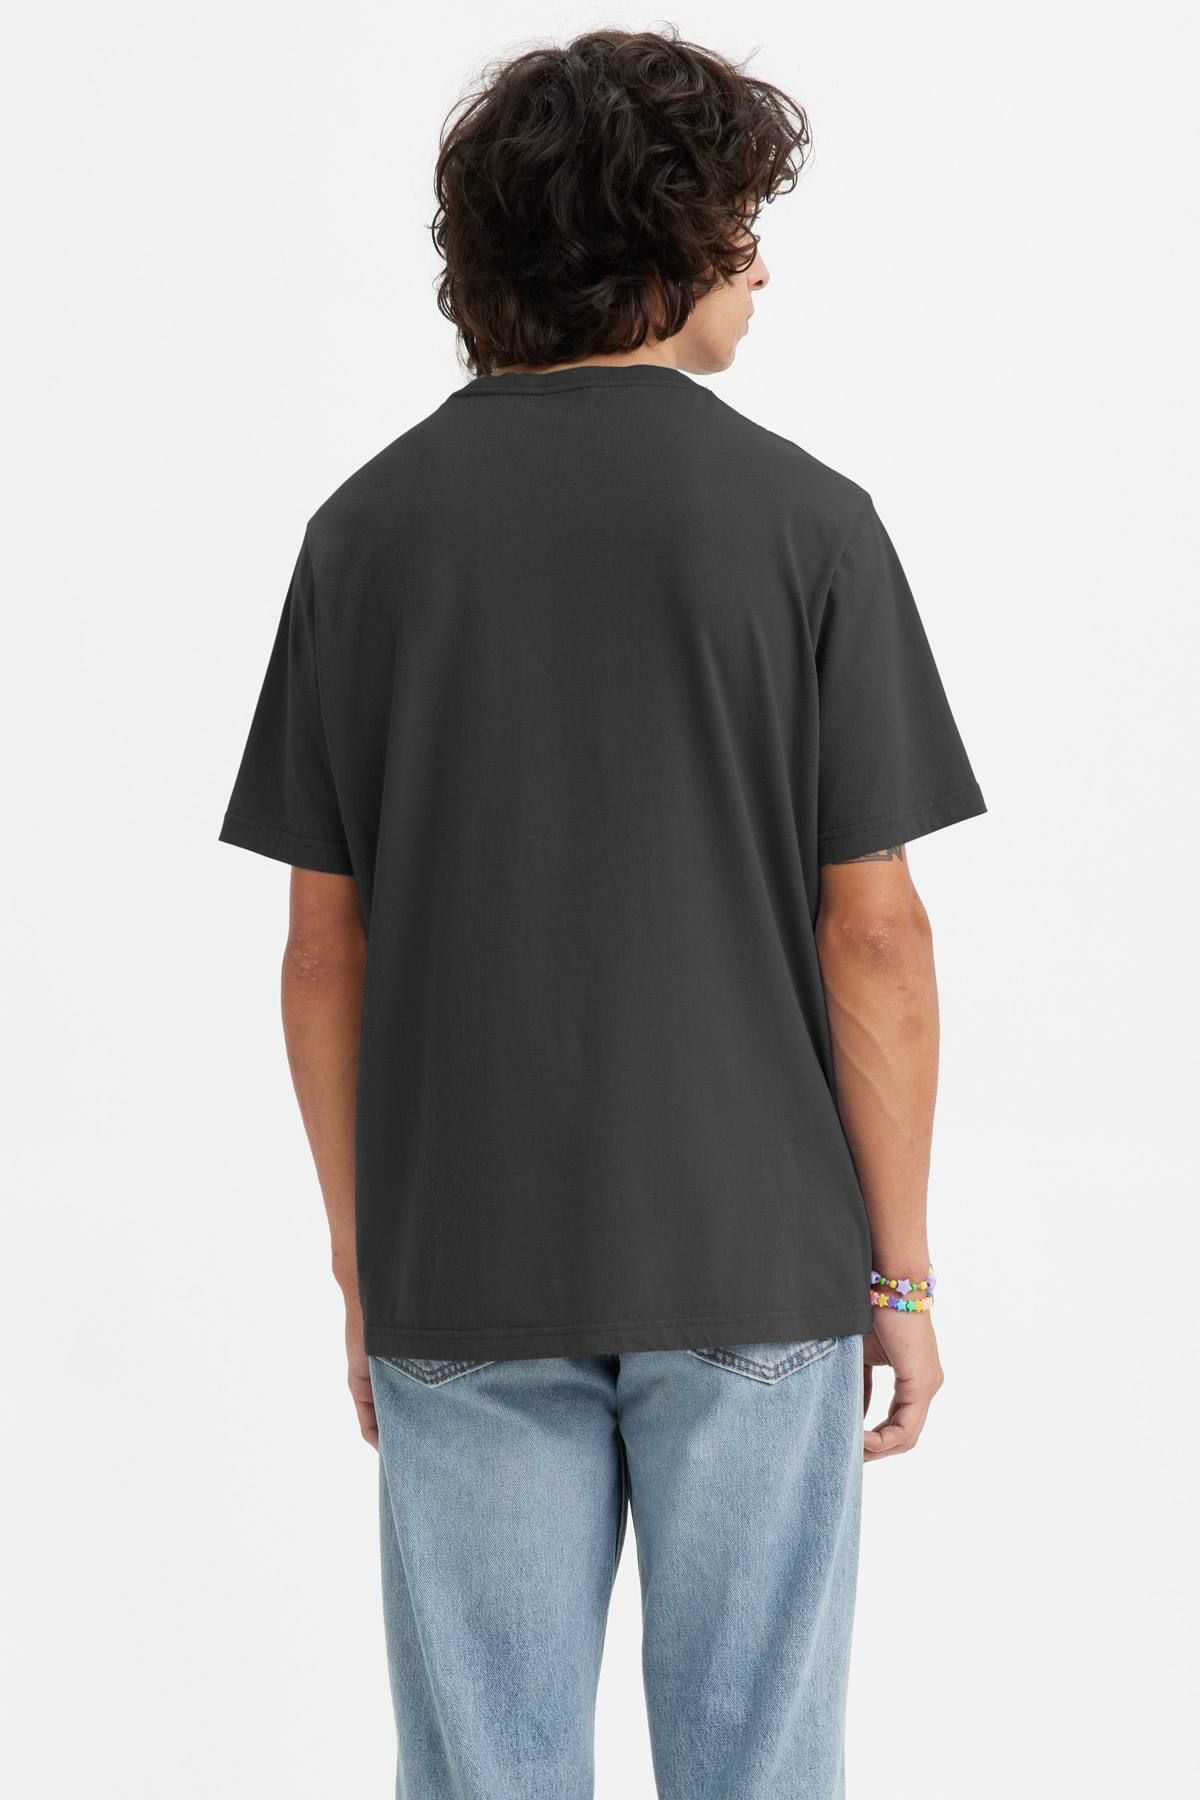 Levi's® Men's Relaxed Baby Tab Short Sleeve T-Shirt Black Men T-Shirts